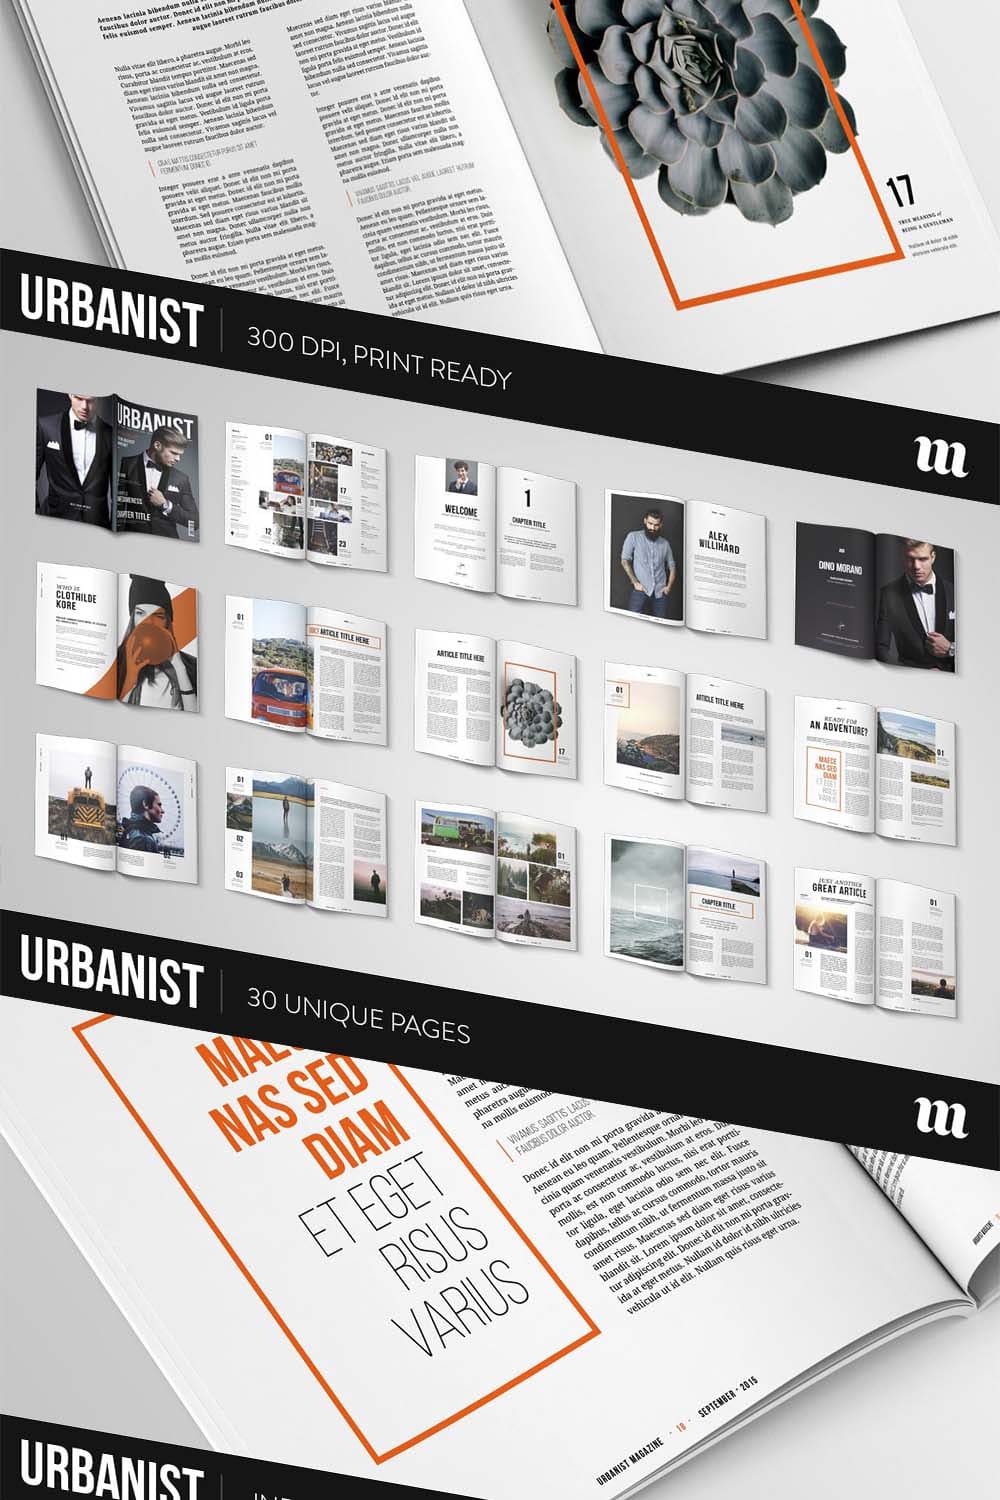 urbanist magazine indesign template pinterest image.